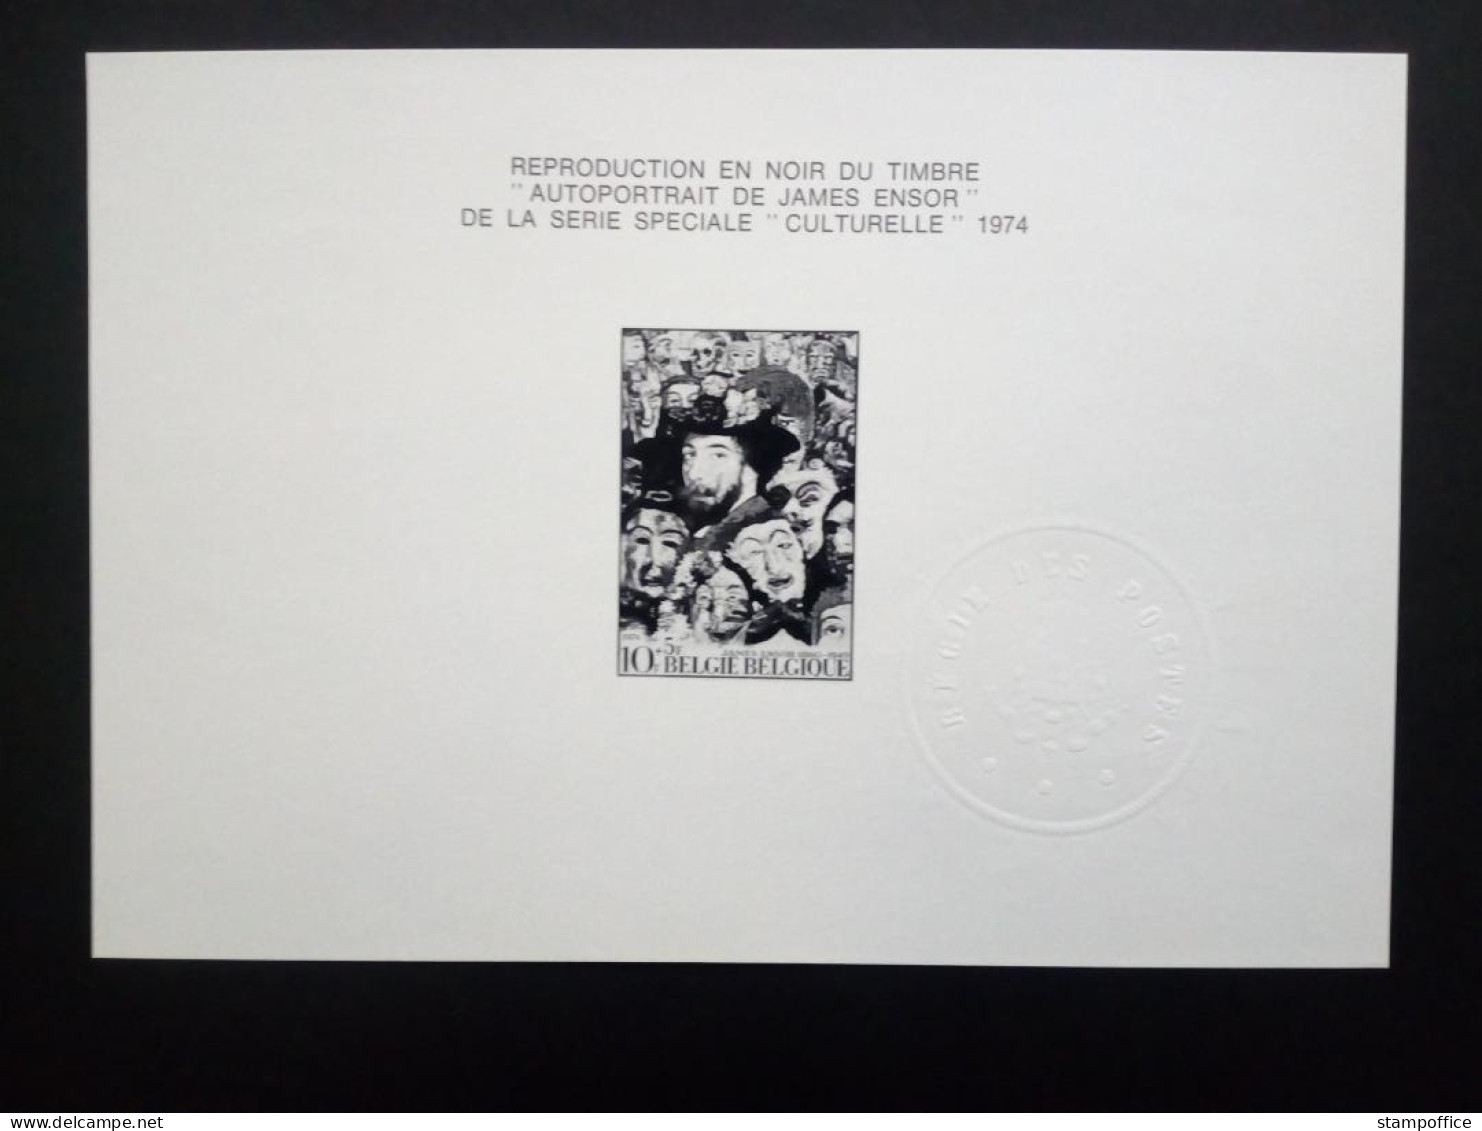 BELGIEN MI-NR. 1763 POSTFRISCH(MINT) IM SCHWARZDRUCKBLOCK KULTUR 1974 JAMES ENSOR - Feuillets N&B Offerts Par La Poste [ZN & GC]